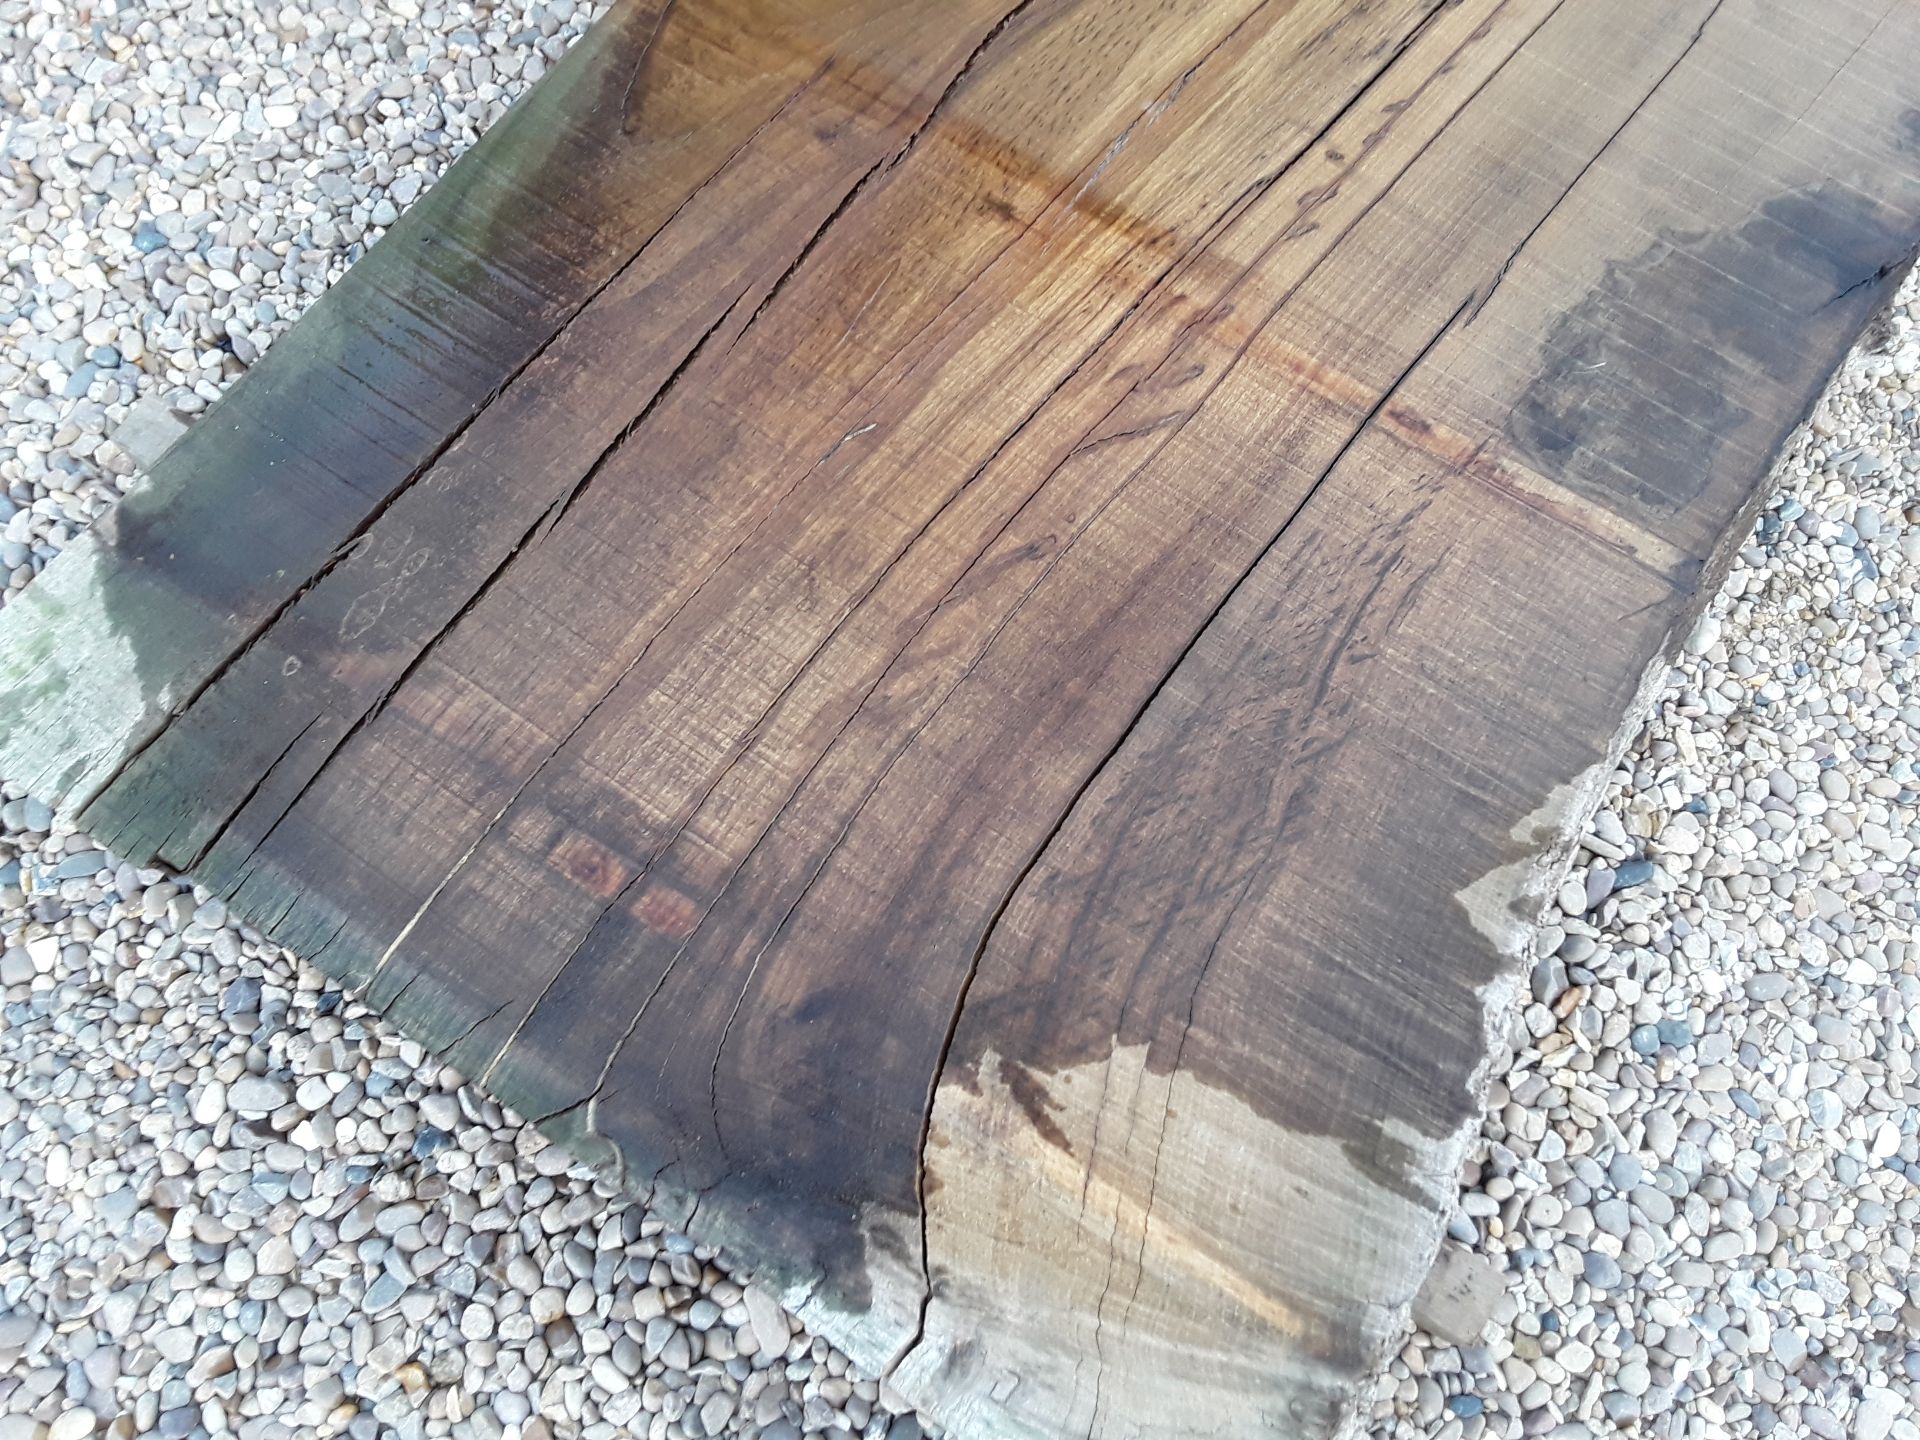 Hardwood Air Dried Sawn English Chestnut Waney Edge/ Live Edge Slab/ Table Top - Image 3 of 8